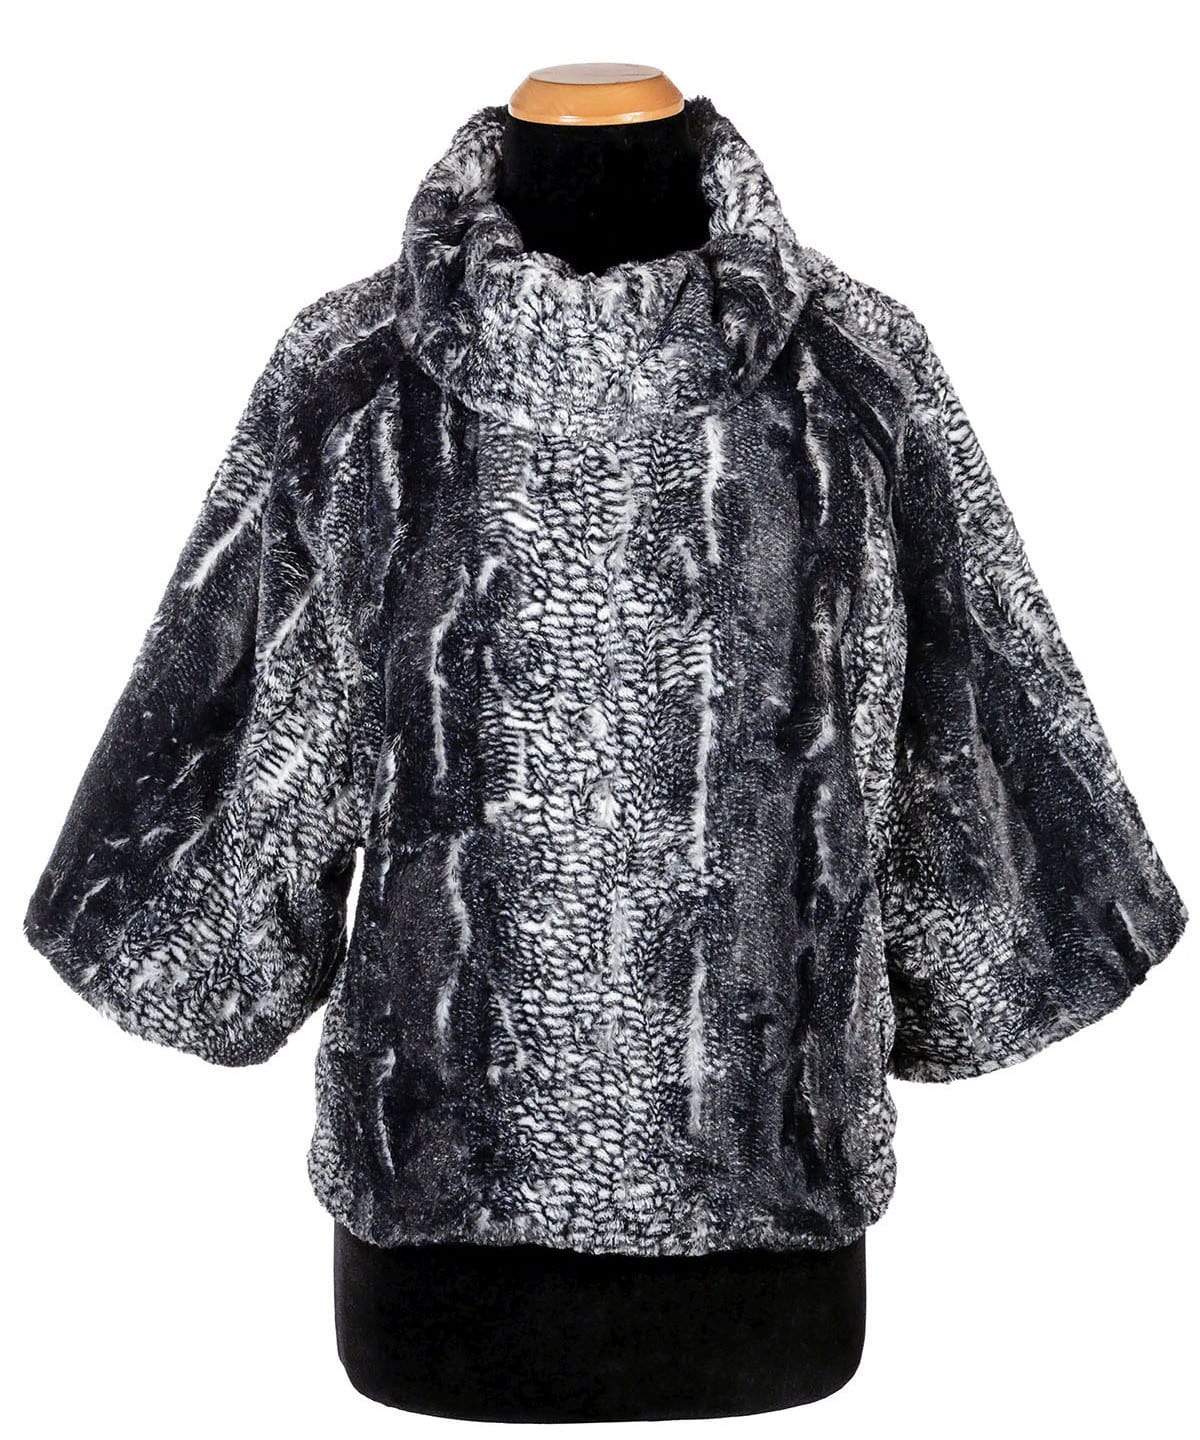 Sweater Top | Black Mamba  Black and White Faux Fur | Handmade By Pandemonium Millinery | Seattle WA USA